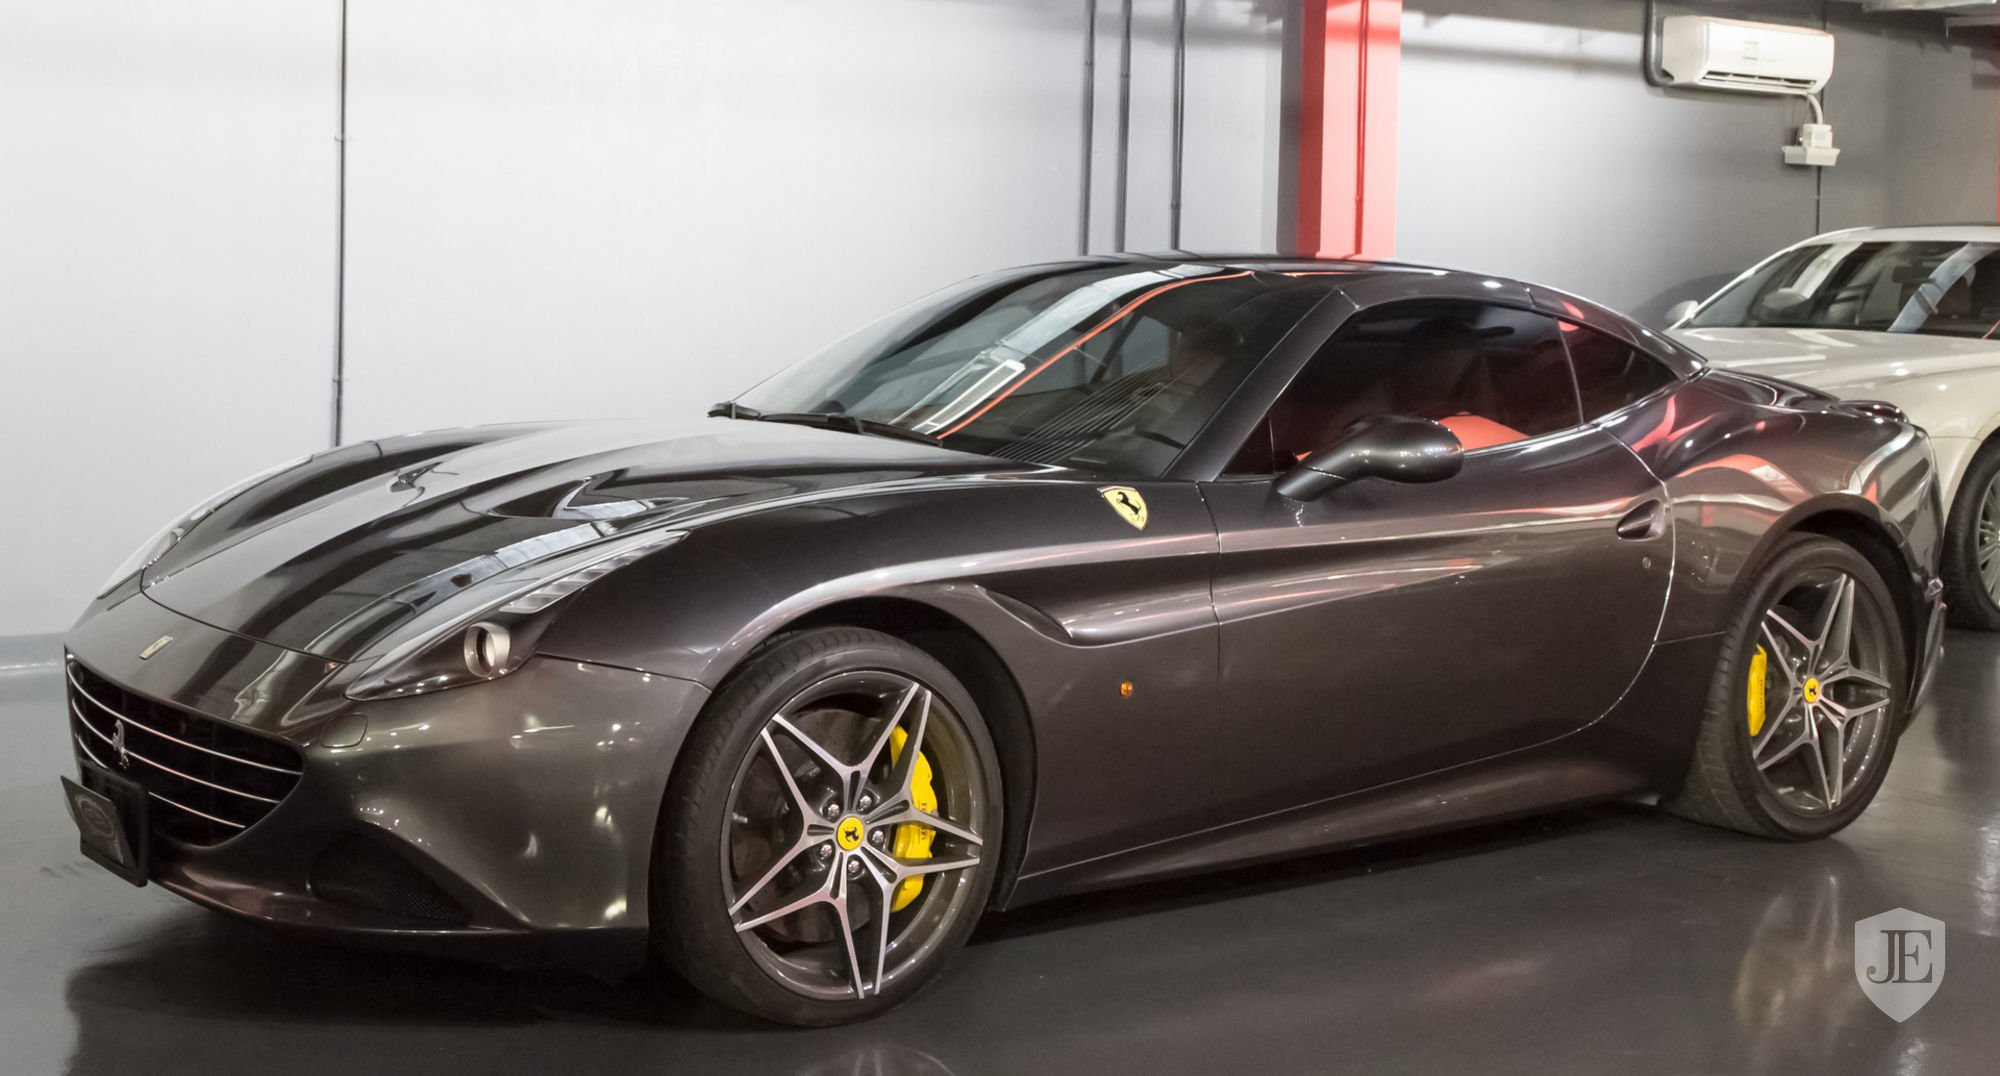 2015 Ferrari California T in Dubai United Arab Emirates for sale on ...